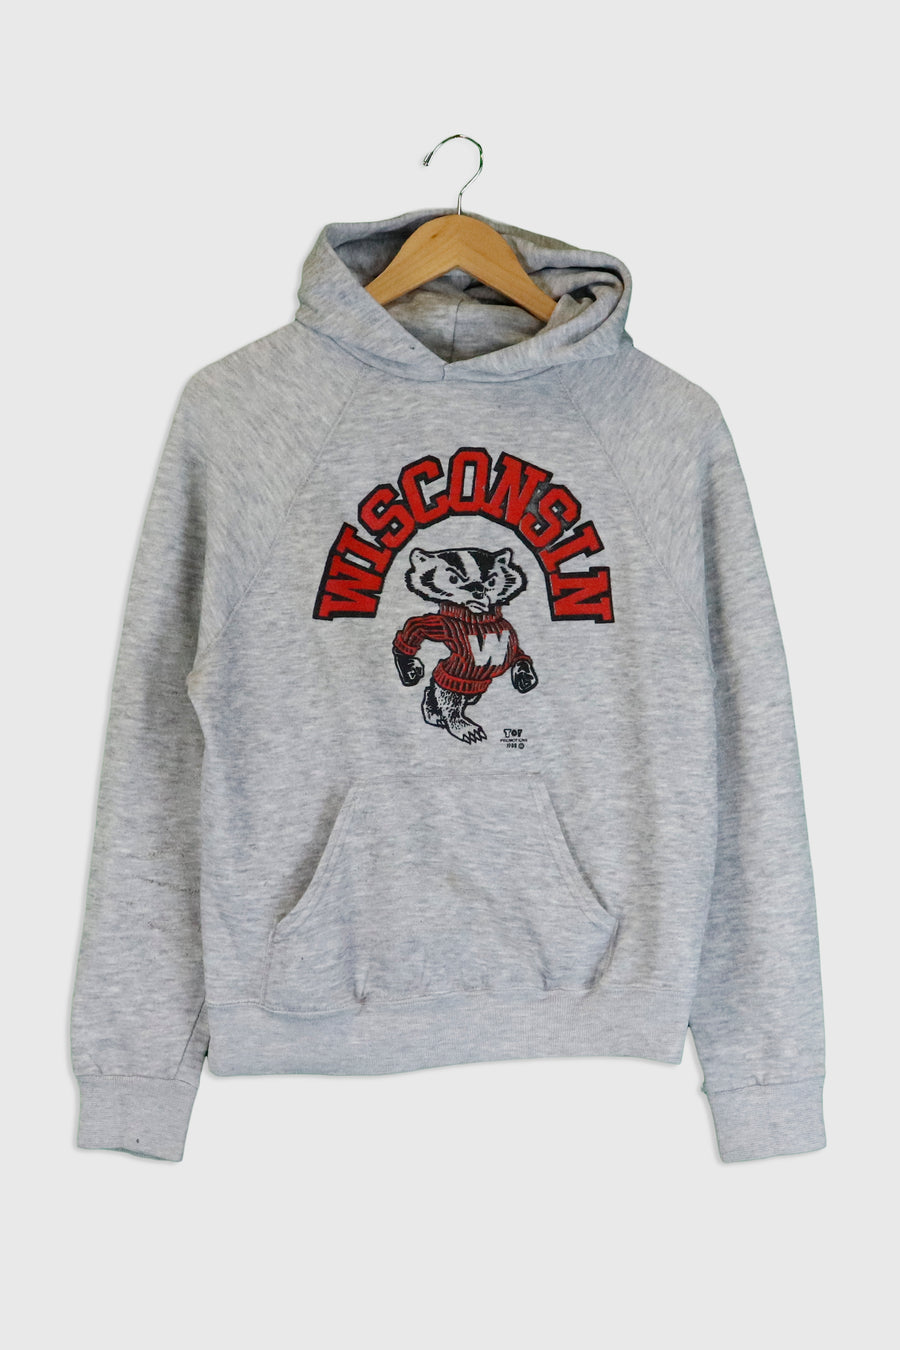 Vintage Wisconsin Badgers Football Vasity Sweatshirt Sz XL